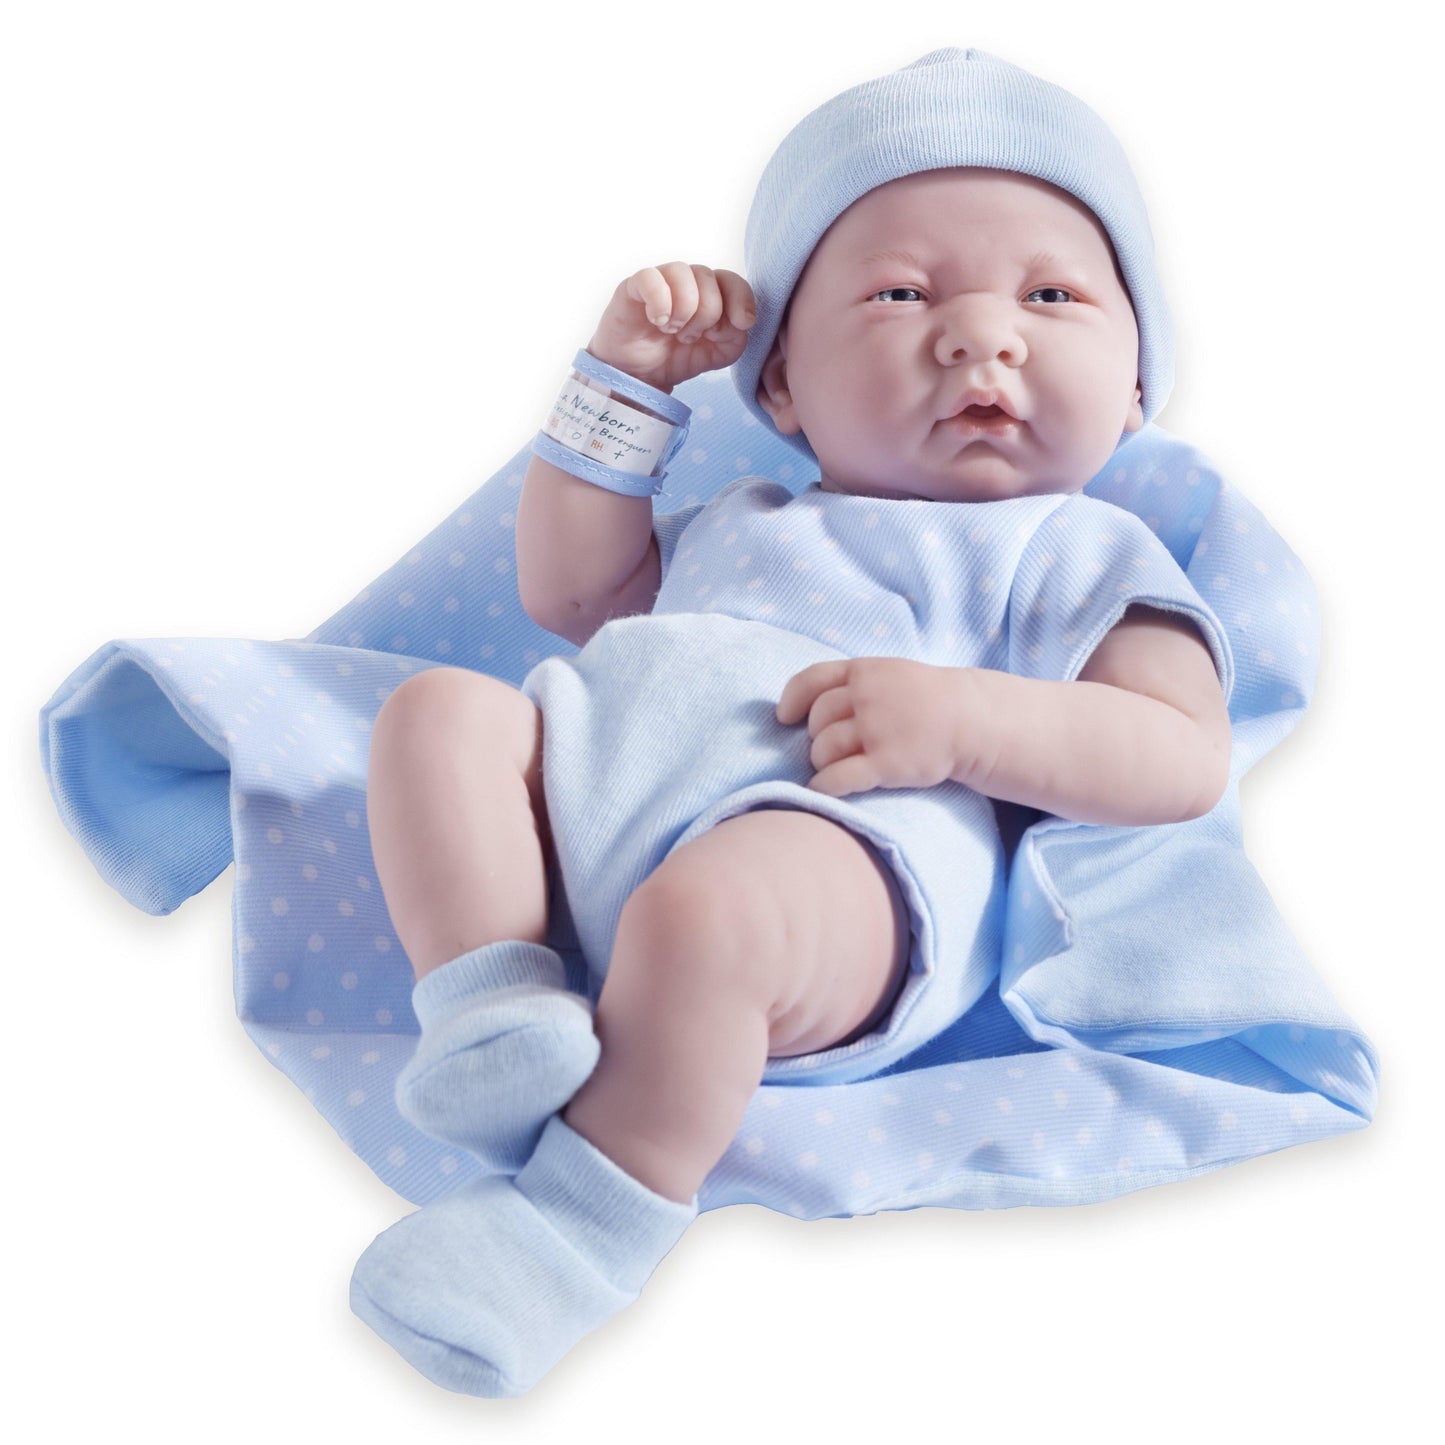 JC Toys, La Newborn Boutique 14 Inch Real Boy Baby Doll-Blue Outfit 9 Pcs Set - JC Toys Group Inc.